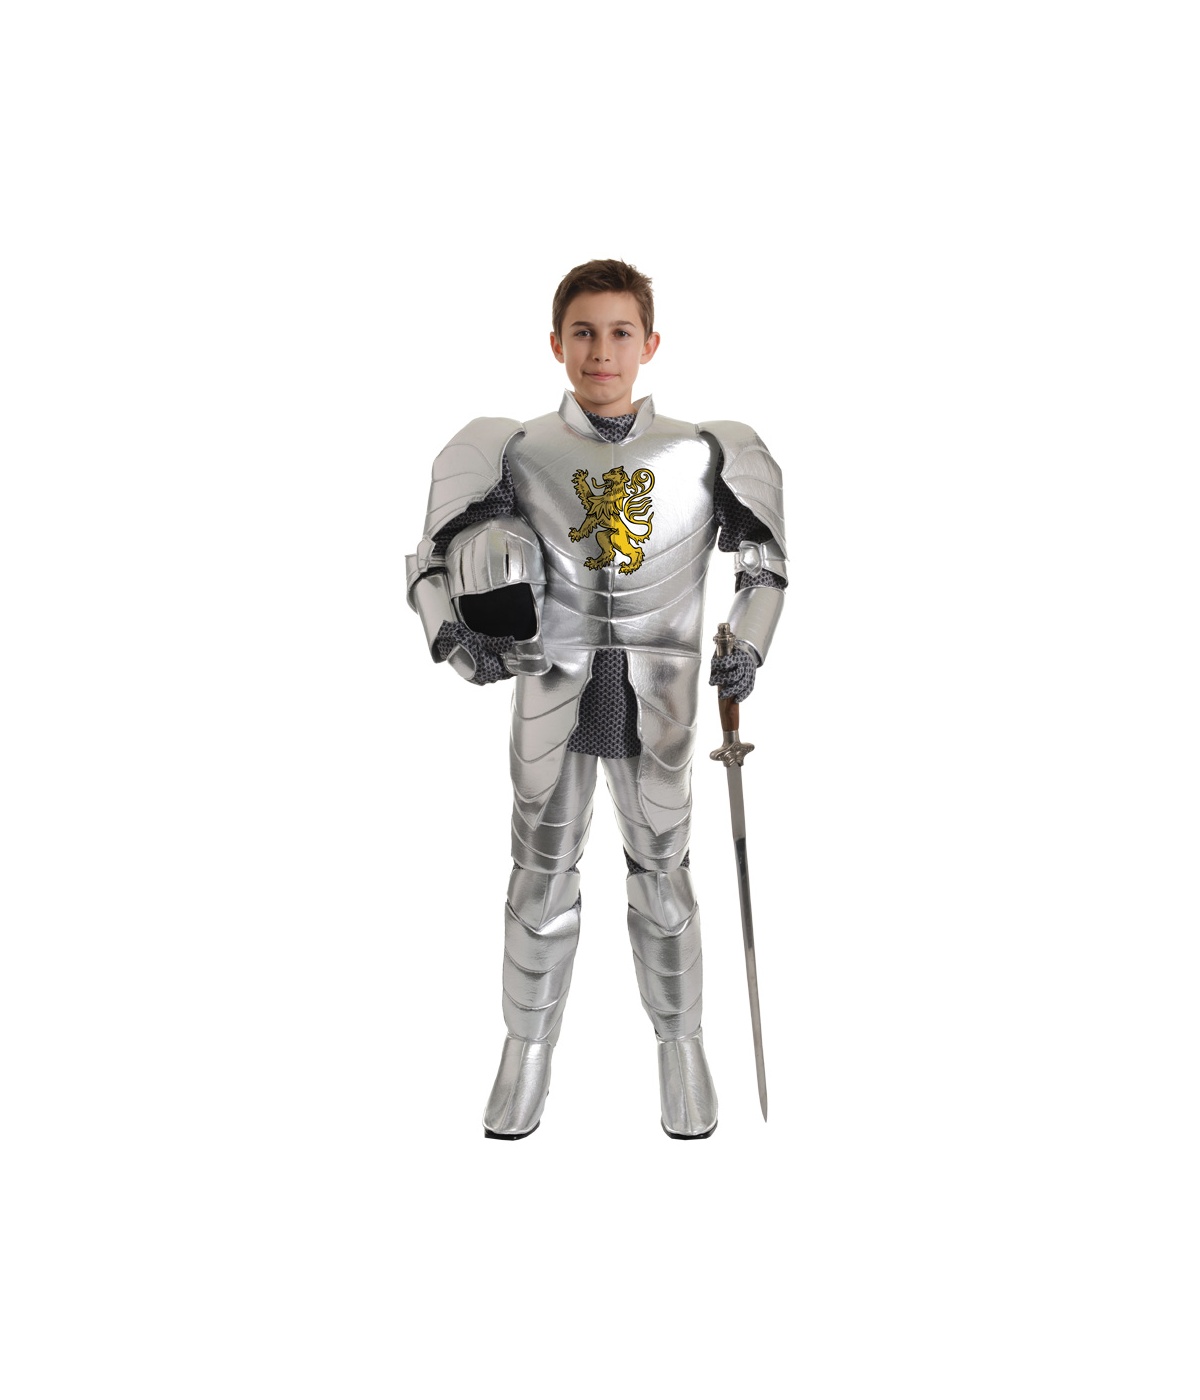  Boys Camelot Knight Costume